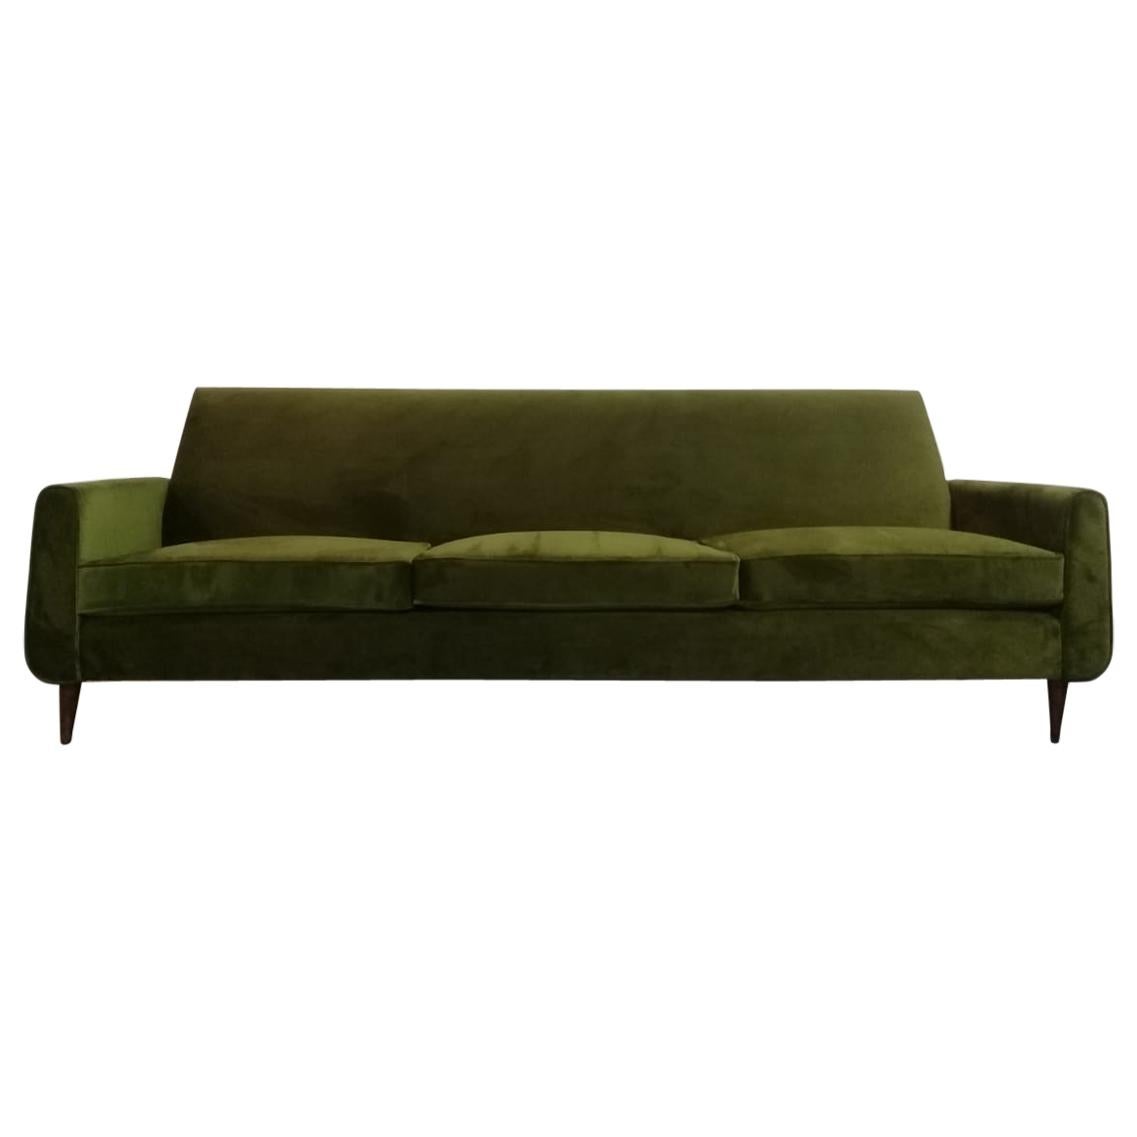 Brazilian Sofa in Green Velvet and Rosewood in Style of Joaquim Tenreiro